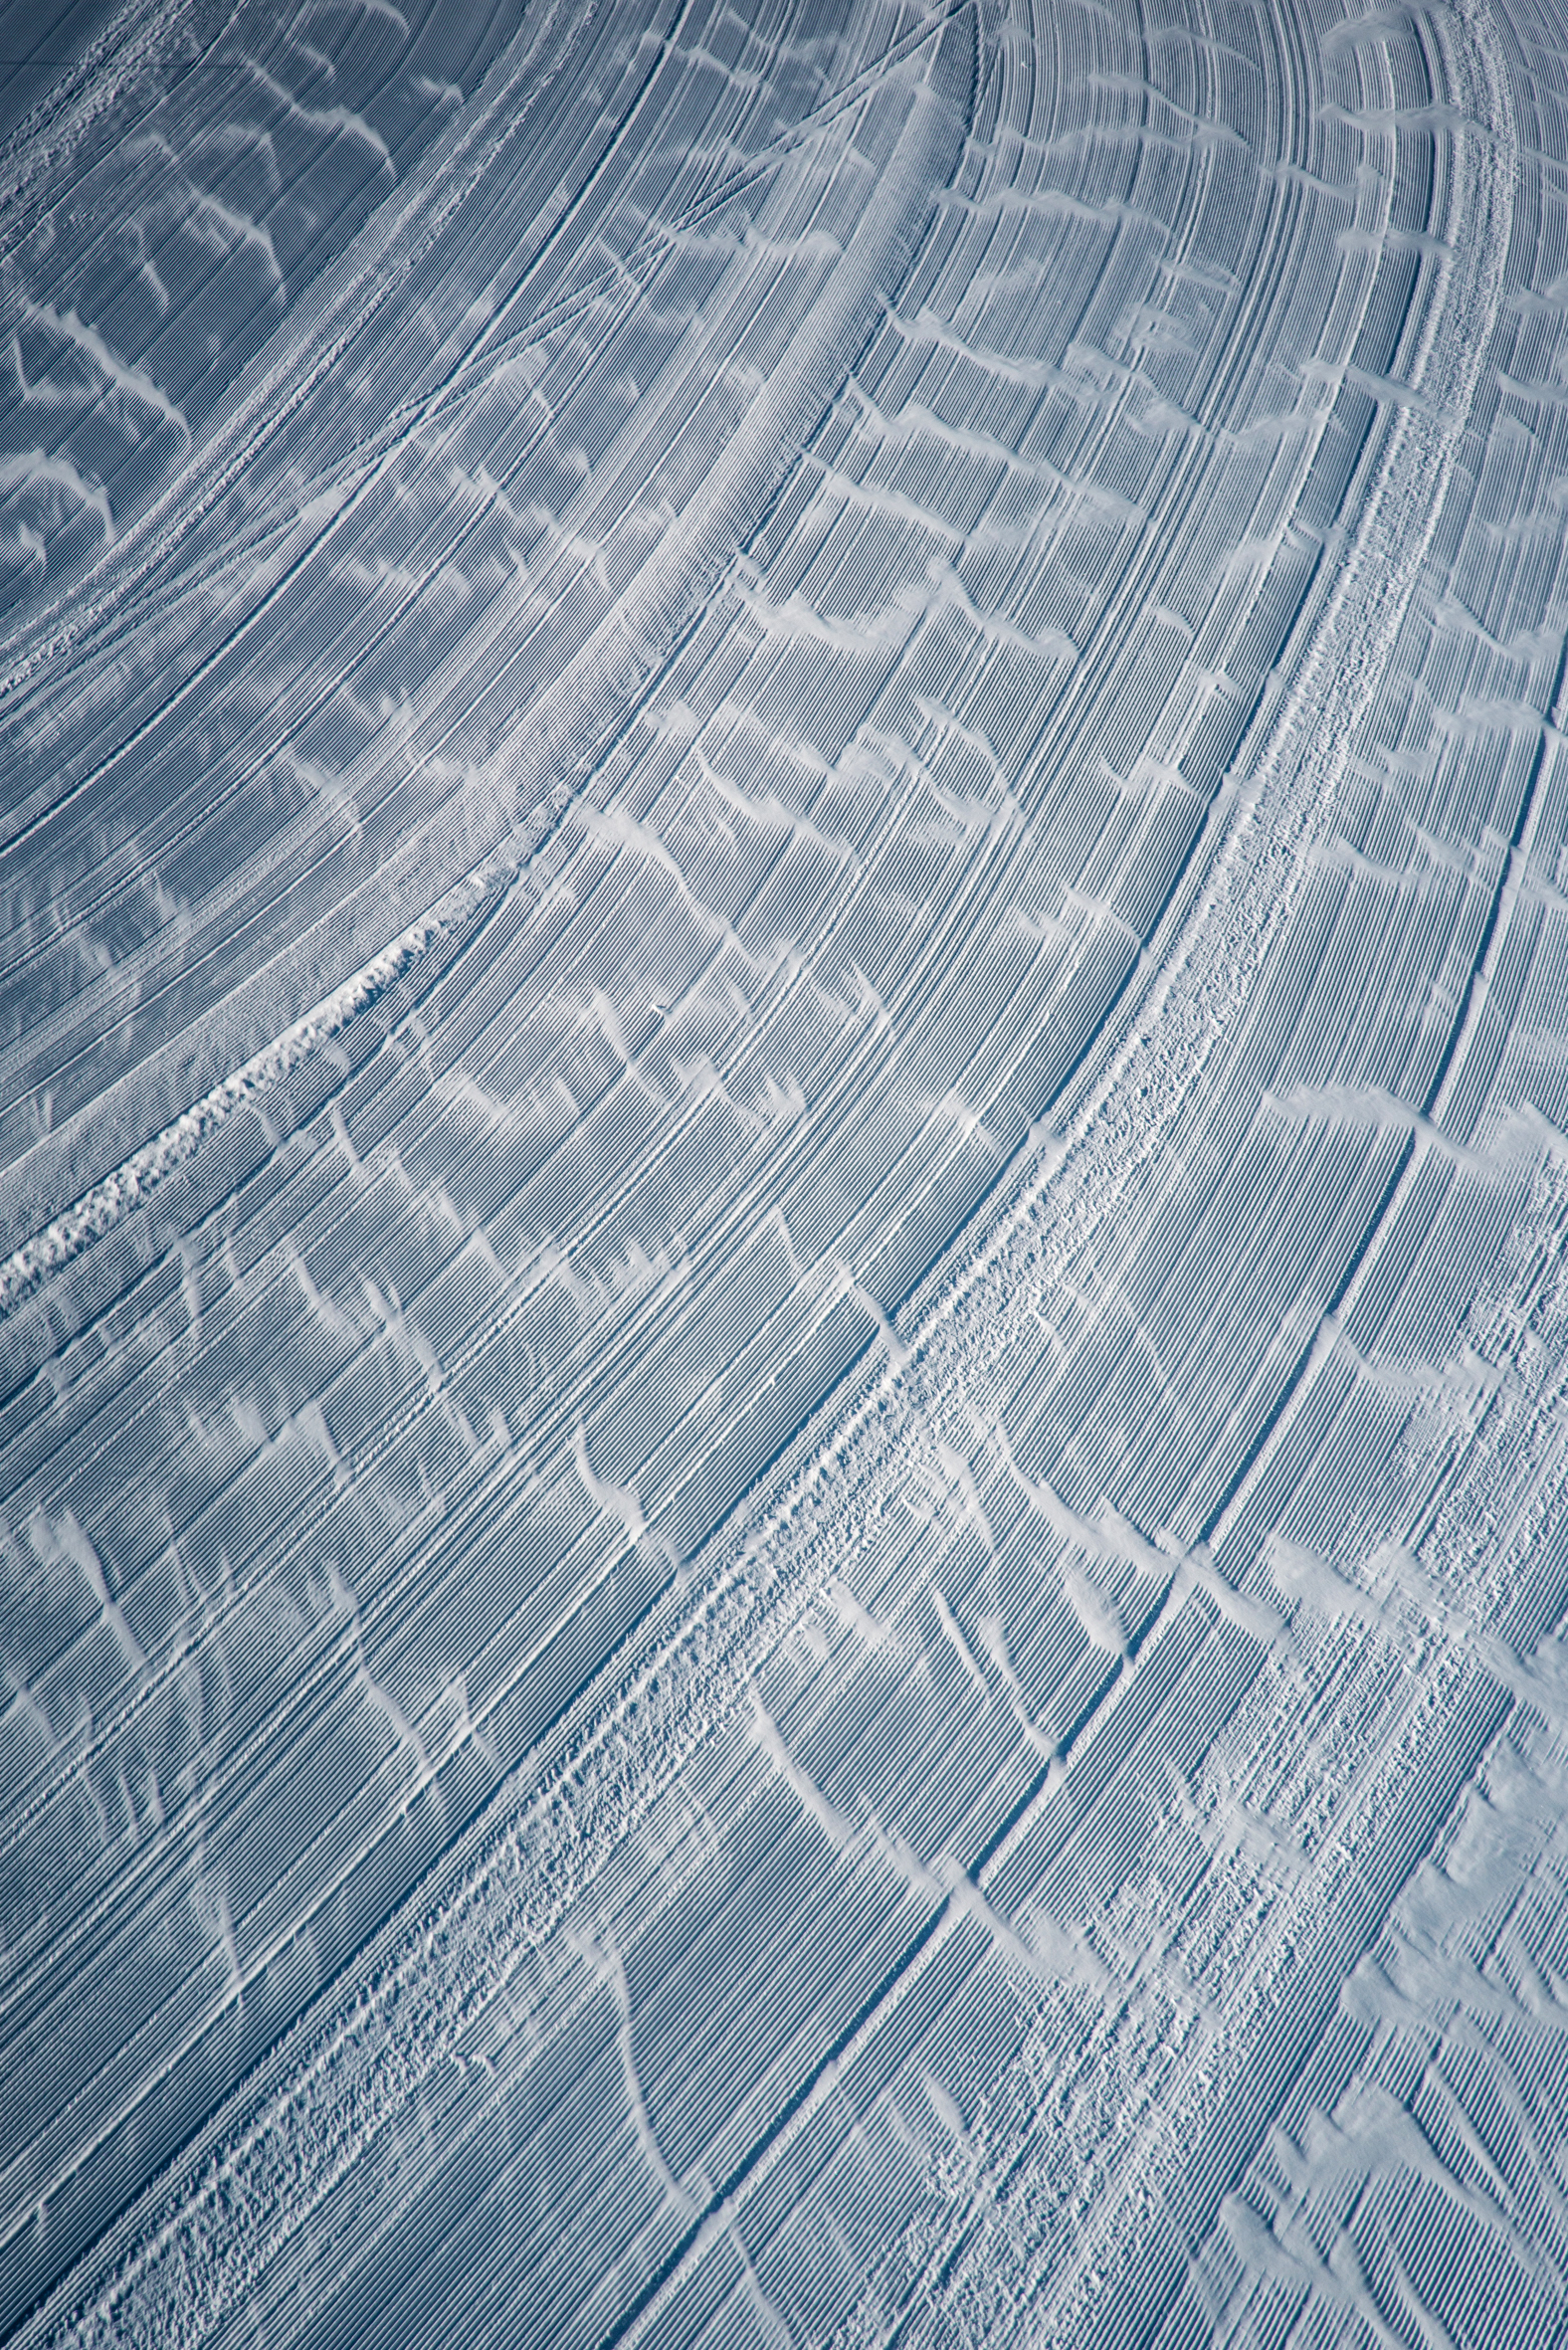 Piste ski montagne neige virage traces